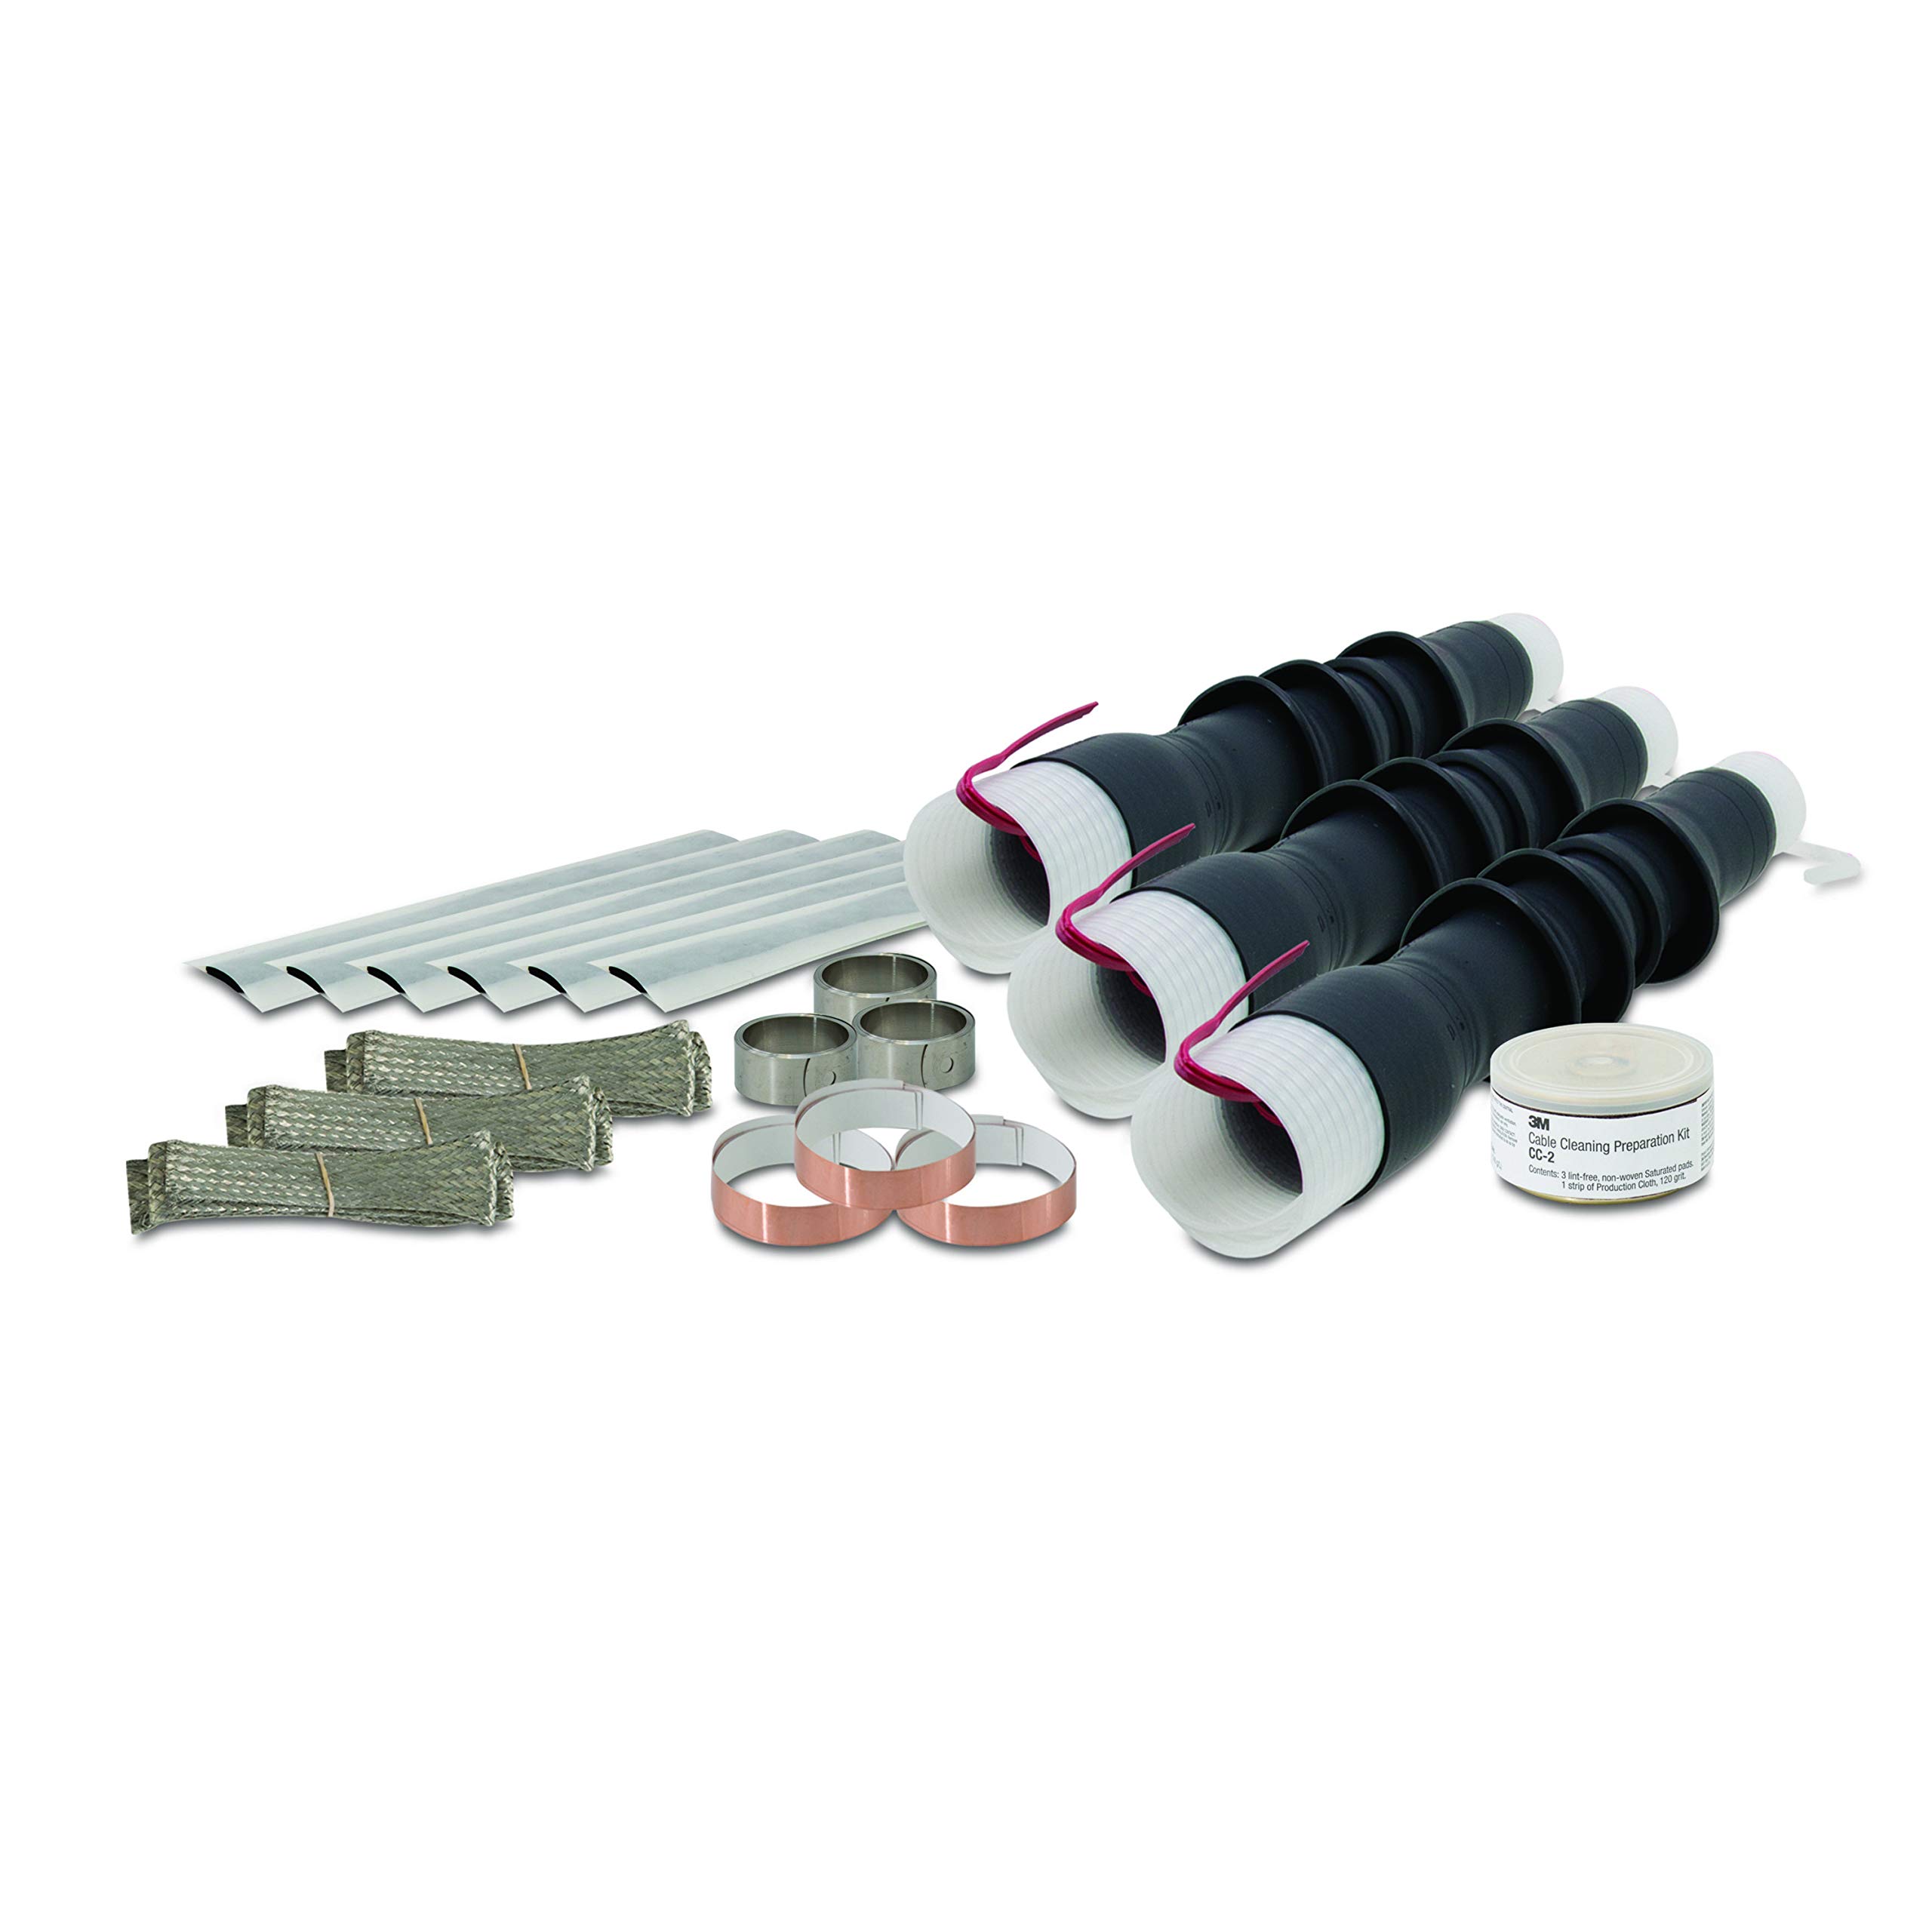 Cold Shrink QT-III 3/C Termination Kit 7623-T-95-3G, Tape/Wire/UniShield®, 5-8.7 kV, Insulation OD 0.70-0.92 in, 3/kit